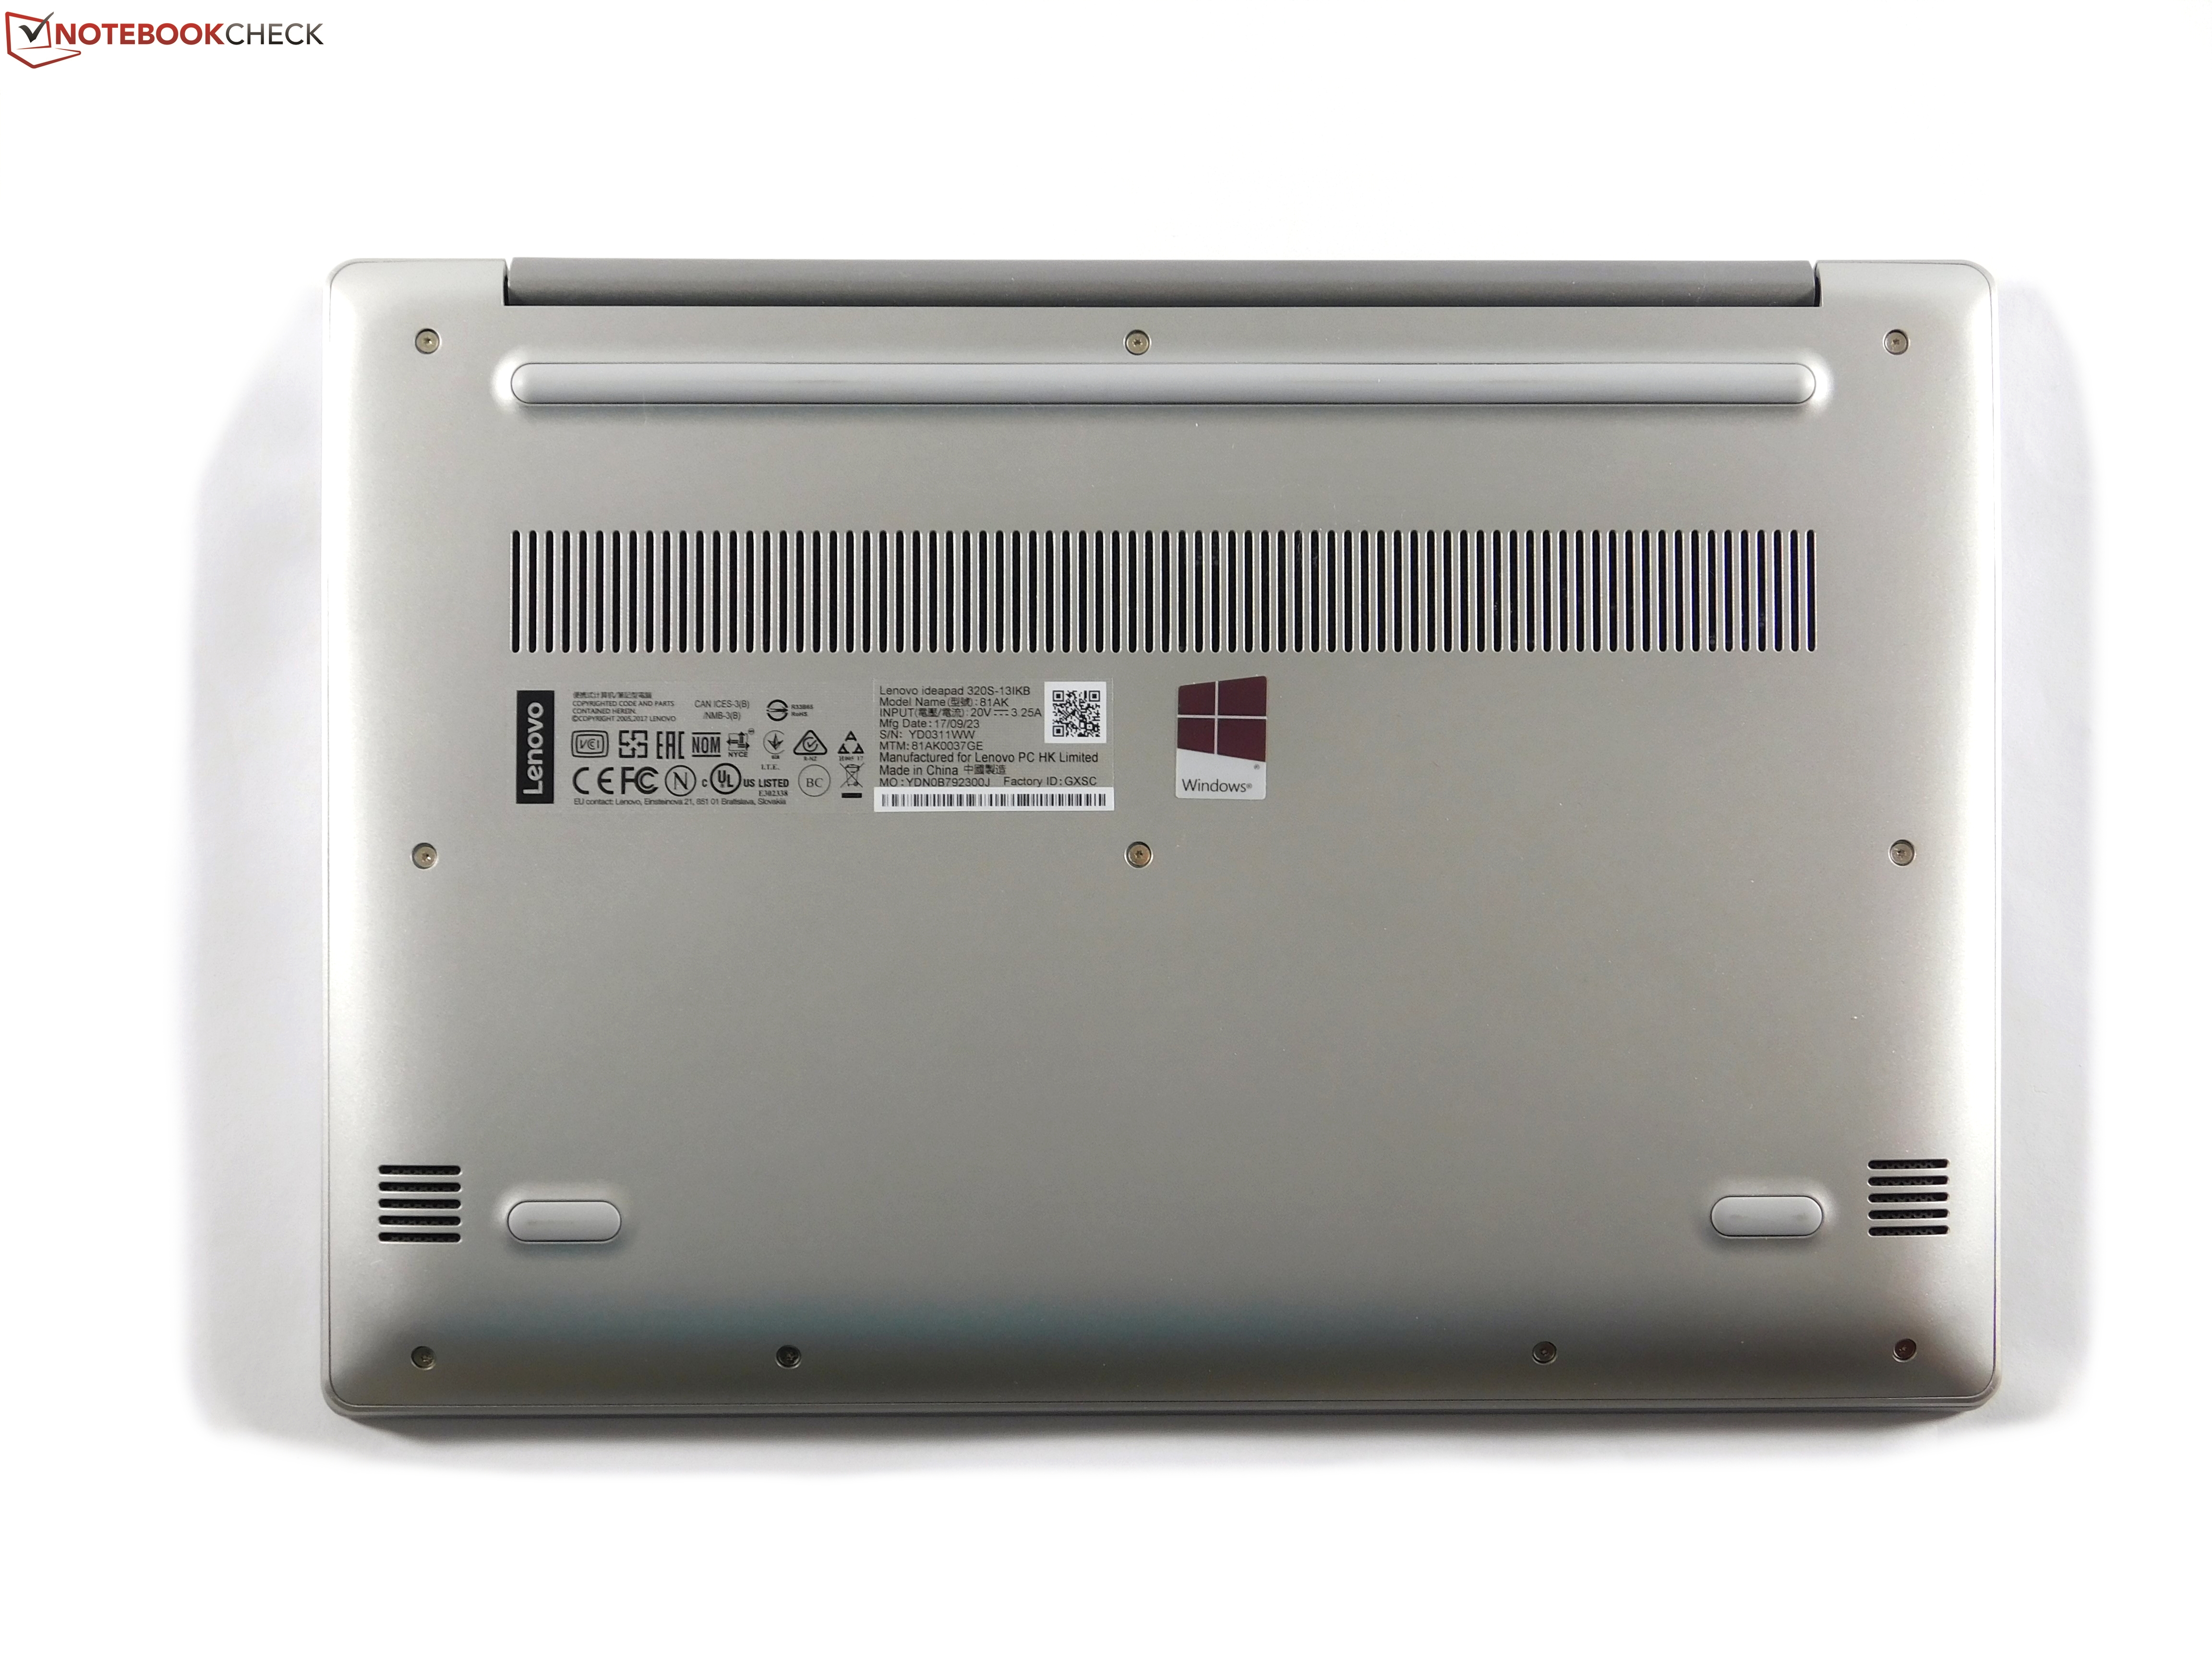 Lenovo IdeaPad 320S-13IKBR (i5-8250U, MX150) Laptop Review 